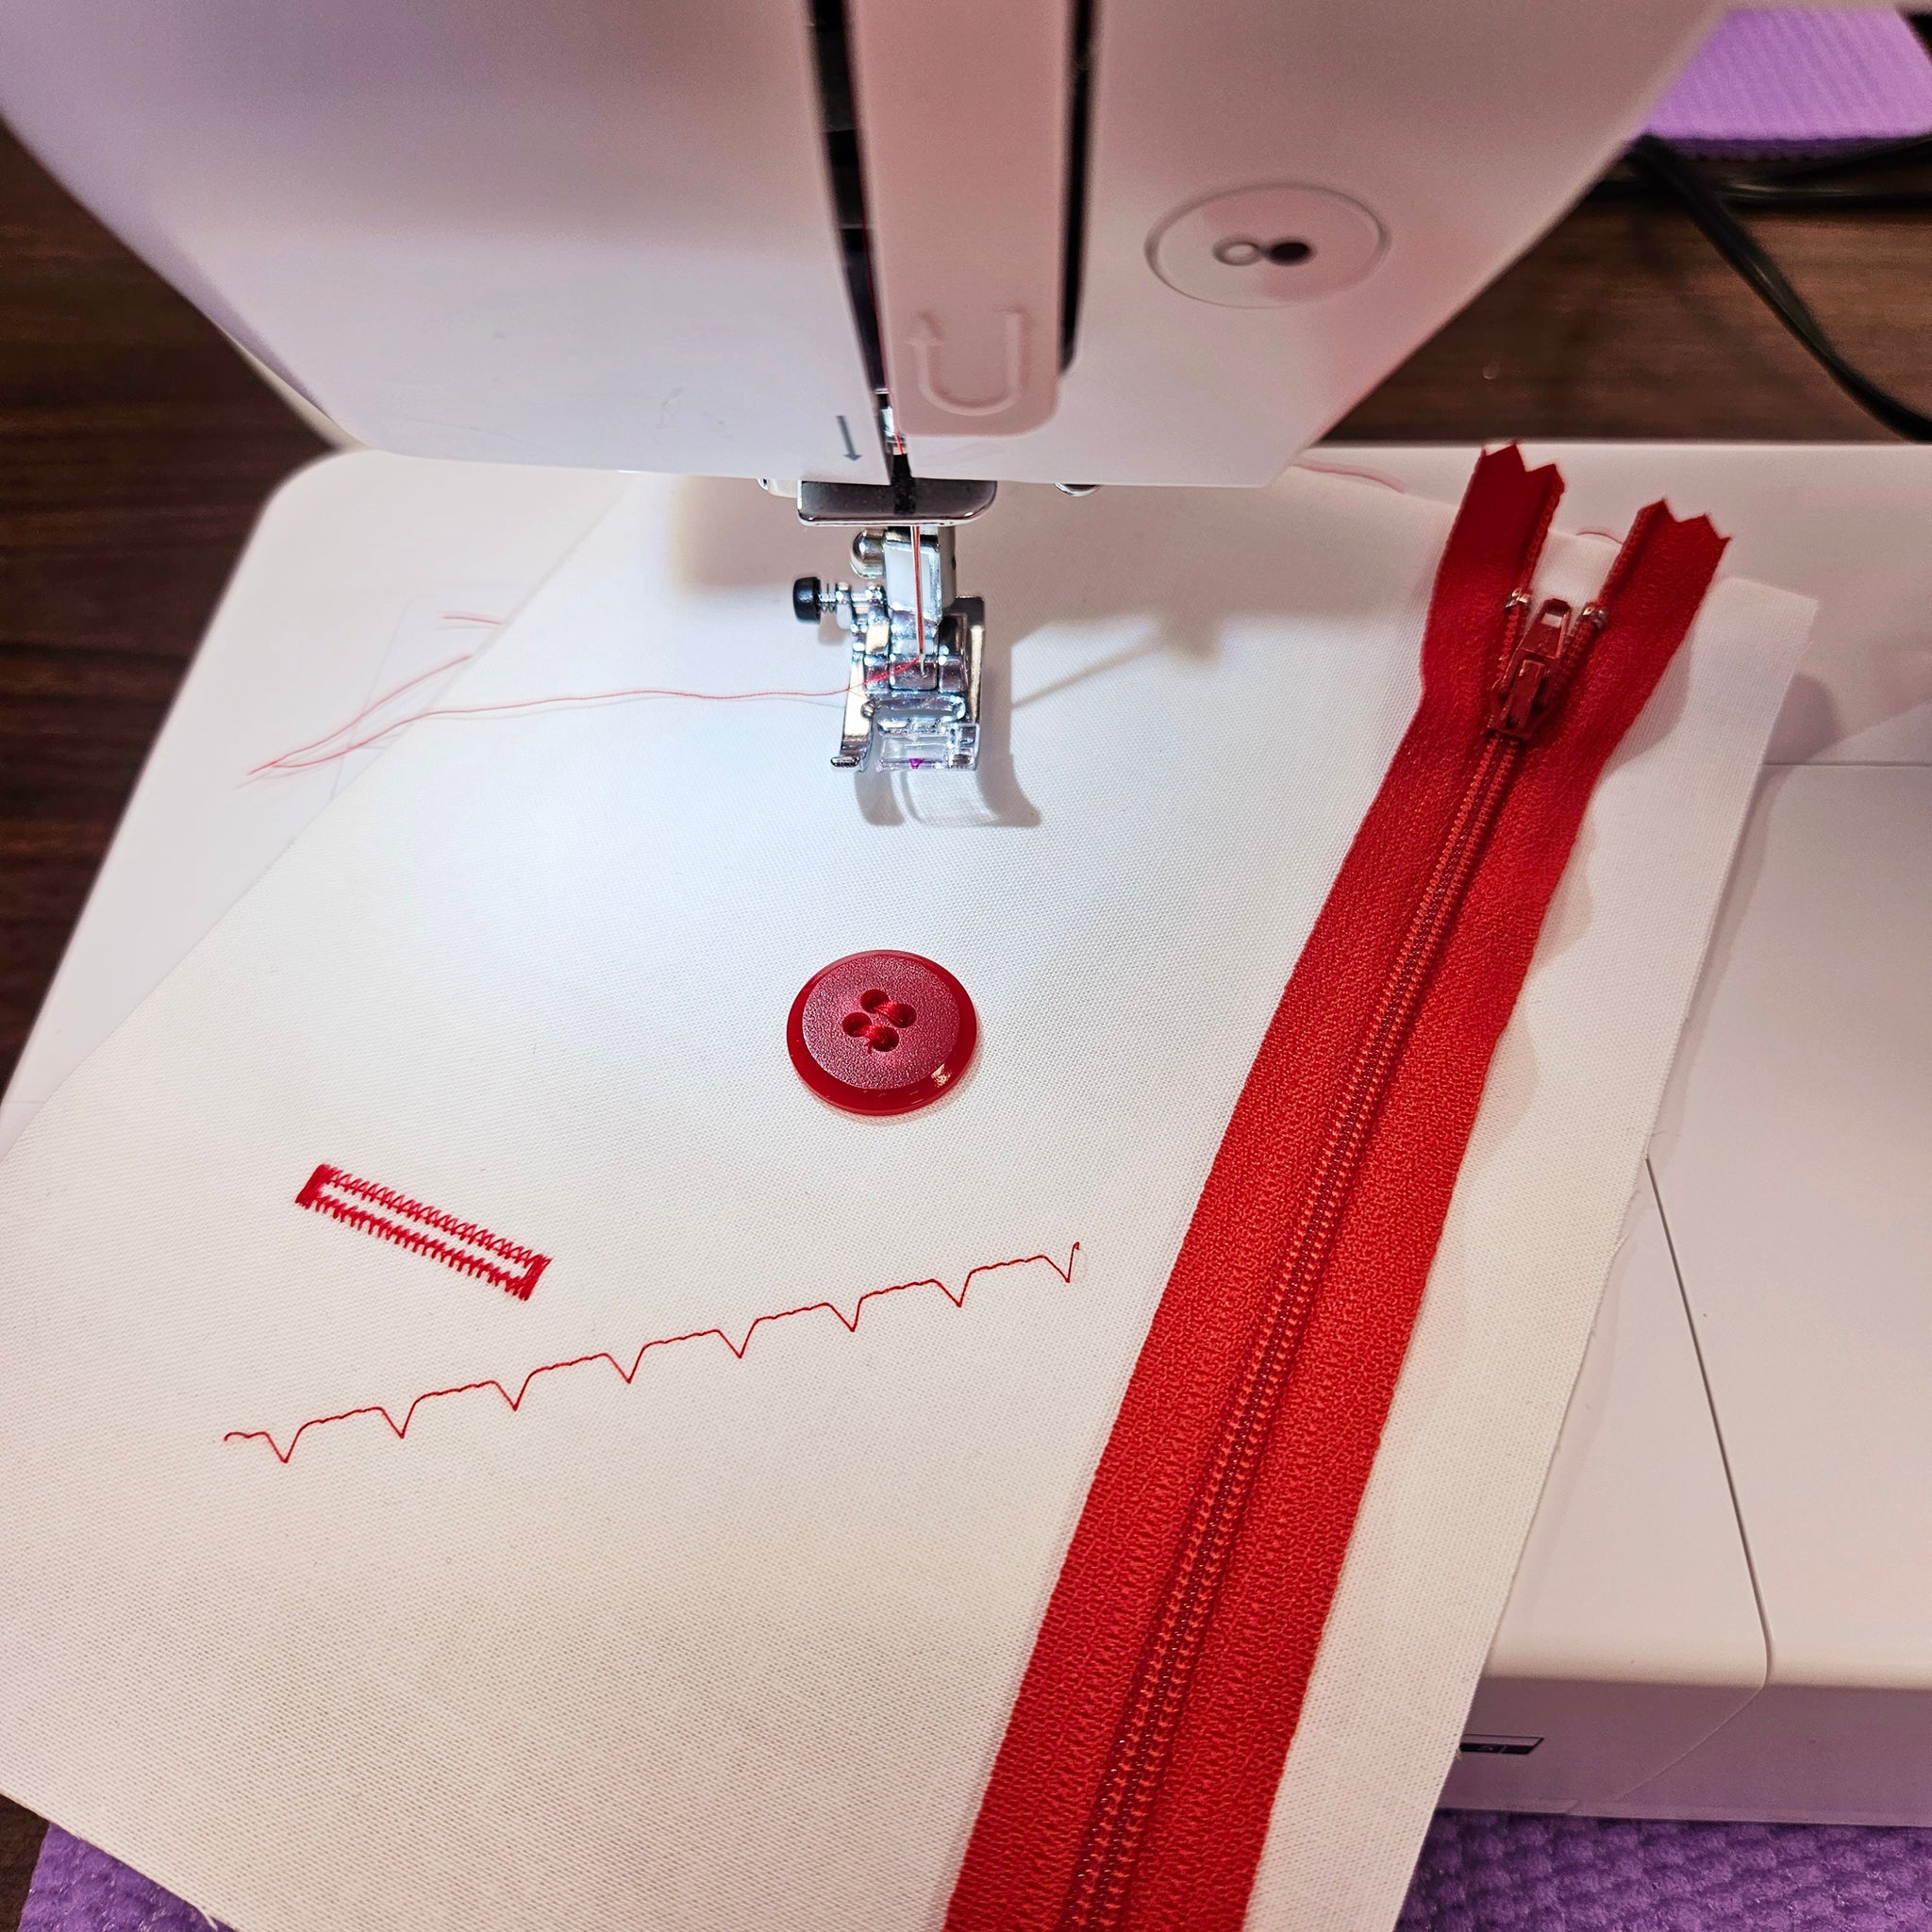 Sewing Machine 201- Beyond the Basics